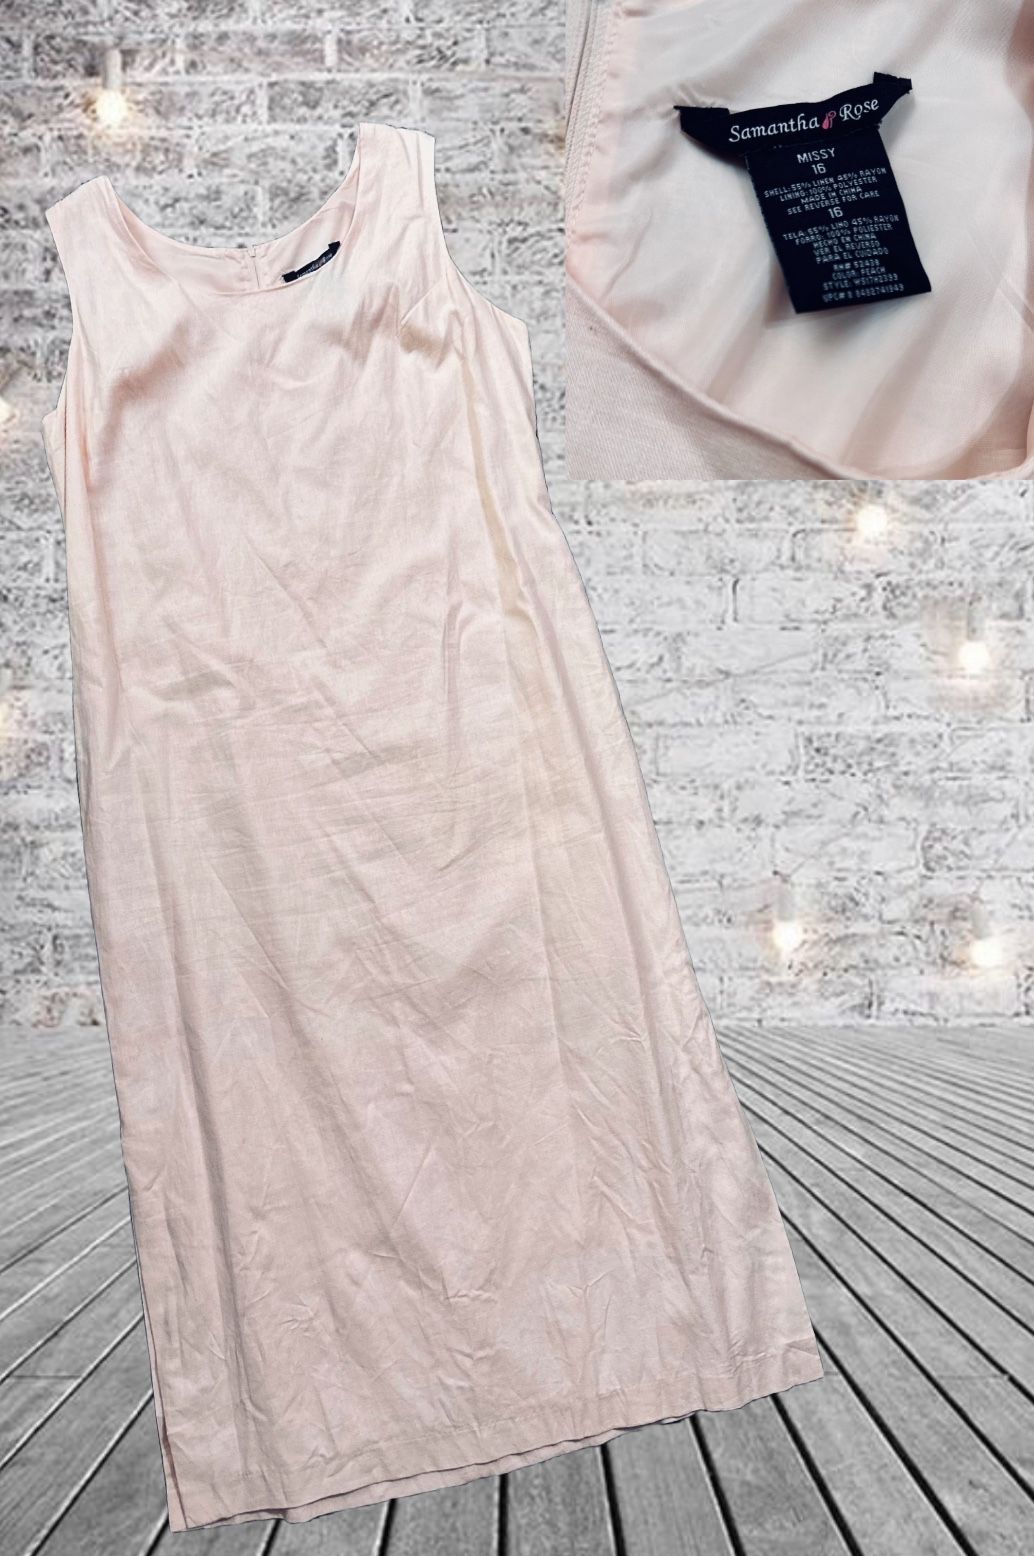 Samantha Rose Pink Linen Dress Midi Size 16 Women’s Sleeveless Lined Summer